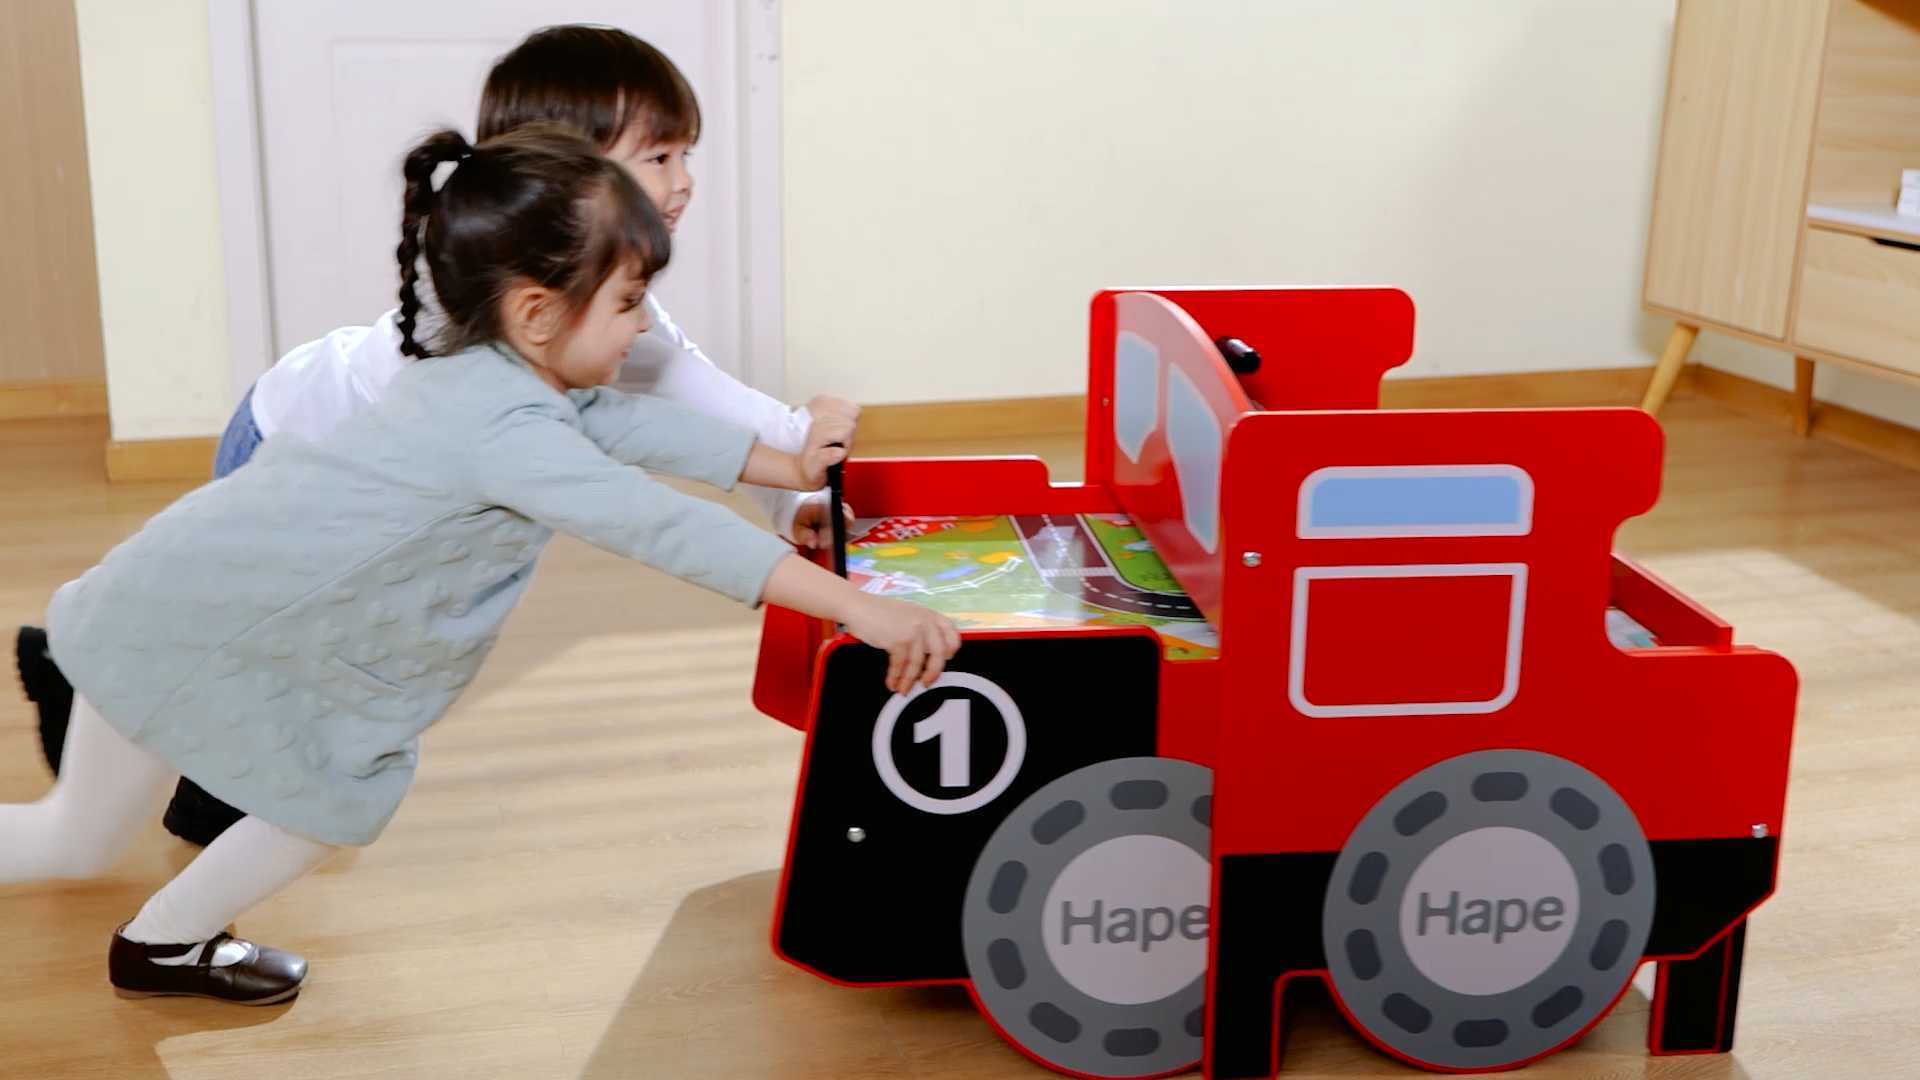 Hape玩具宣传片-玩具火车桌